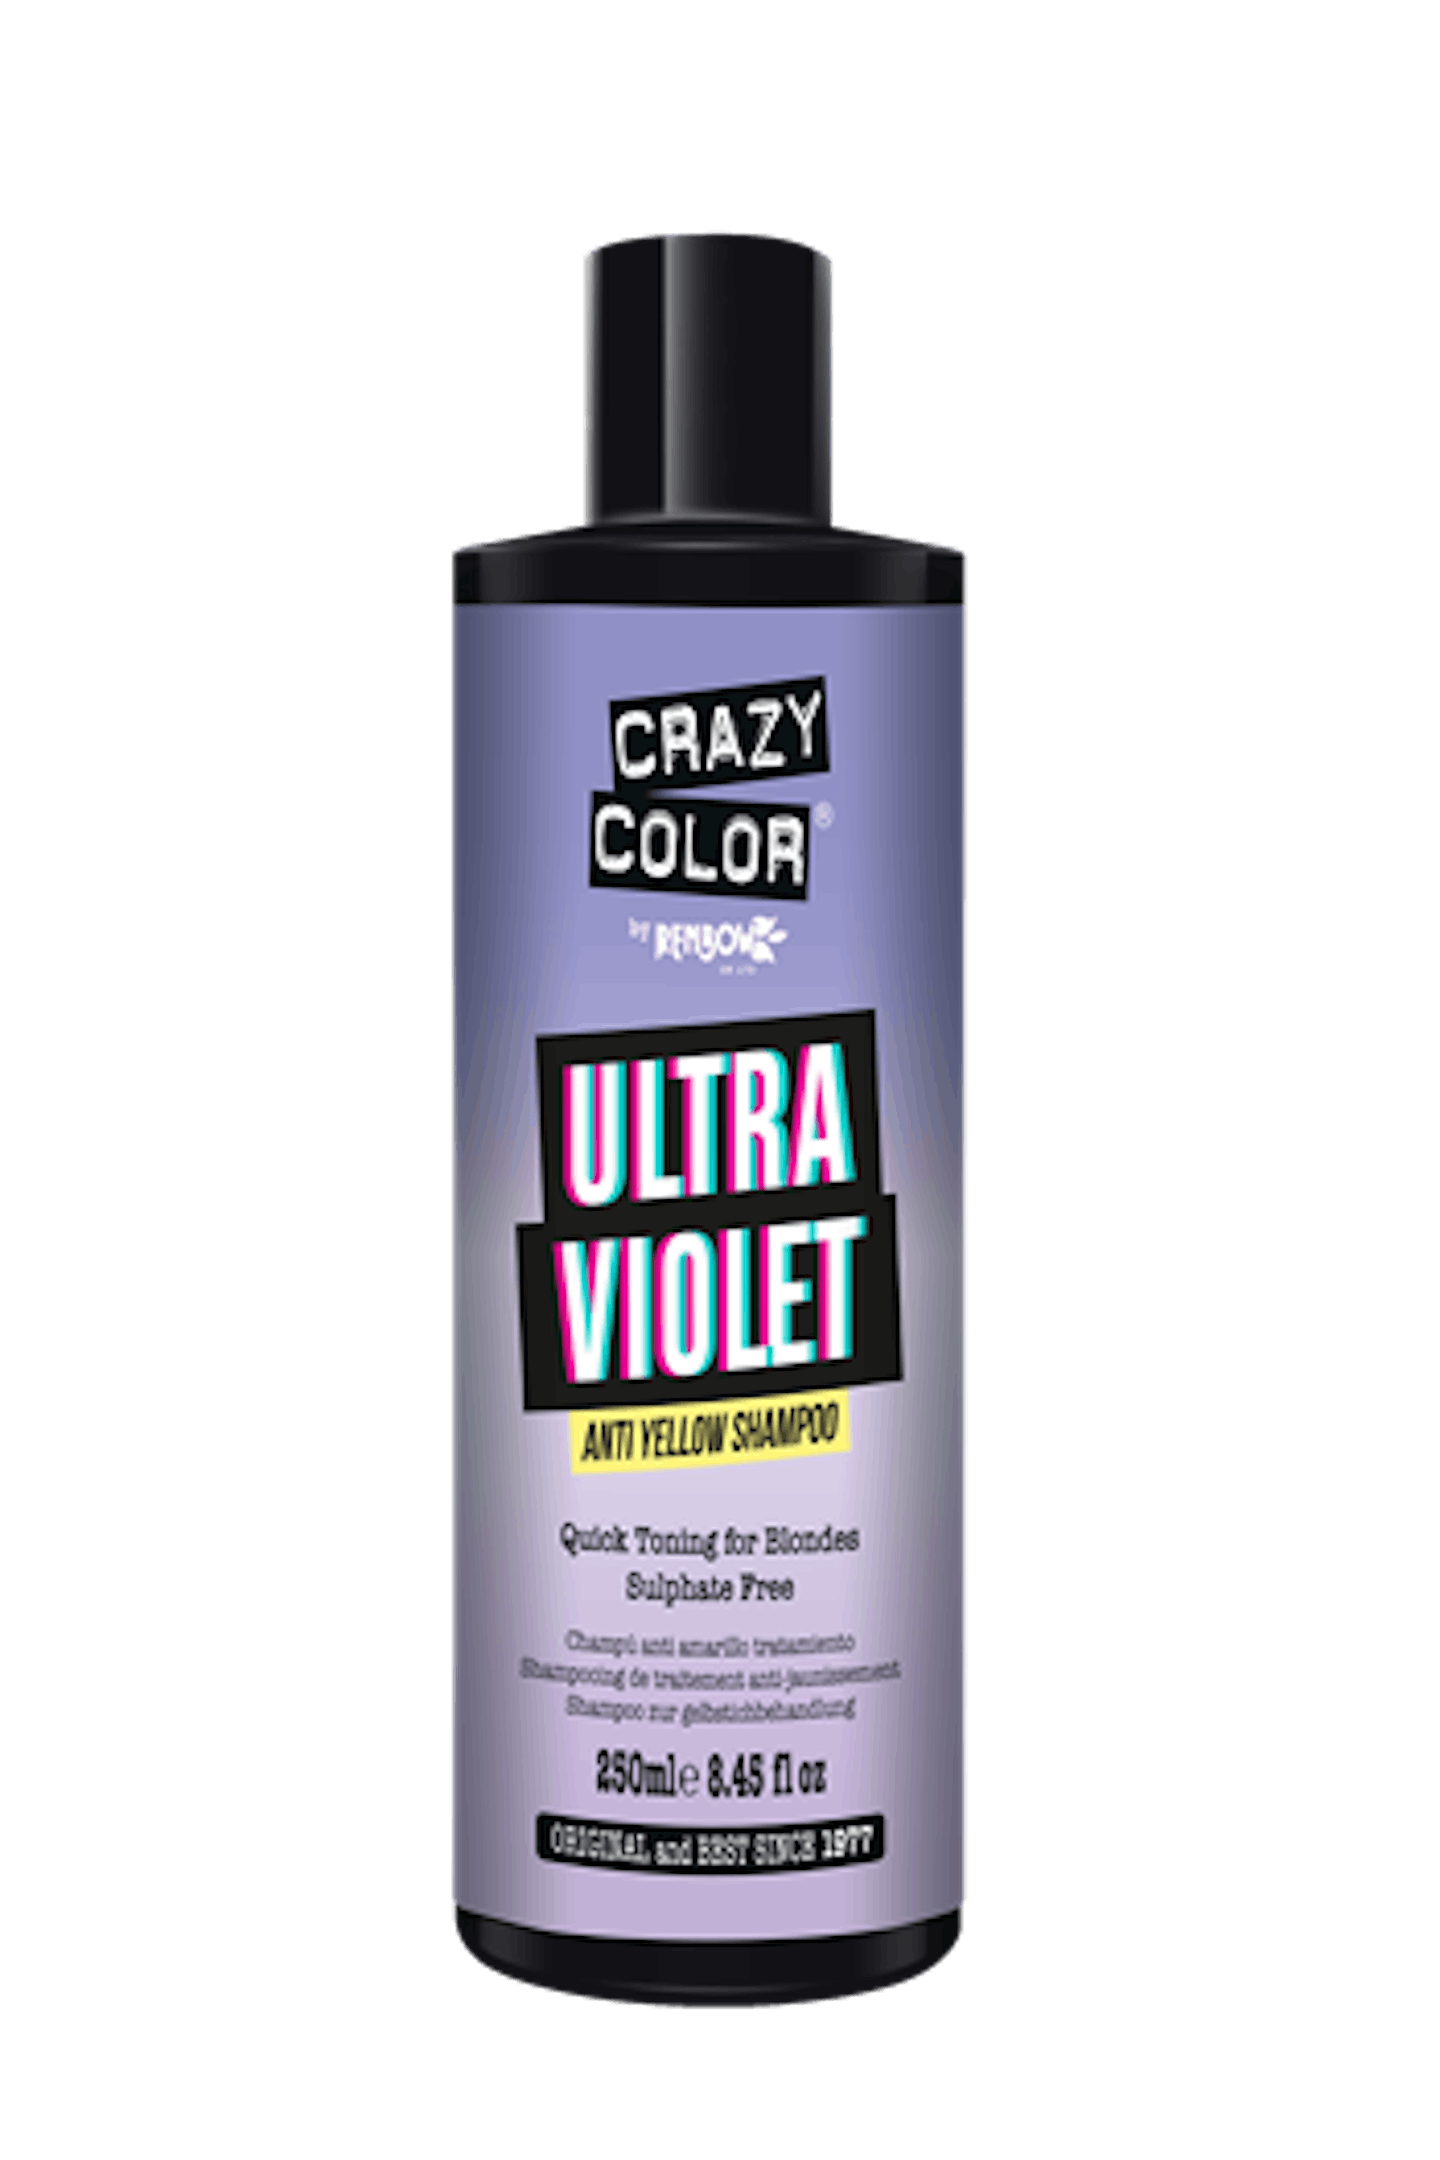 Crazy Color Anti Yellow Shampoo, £11.50